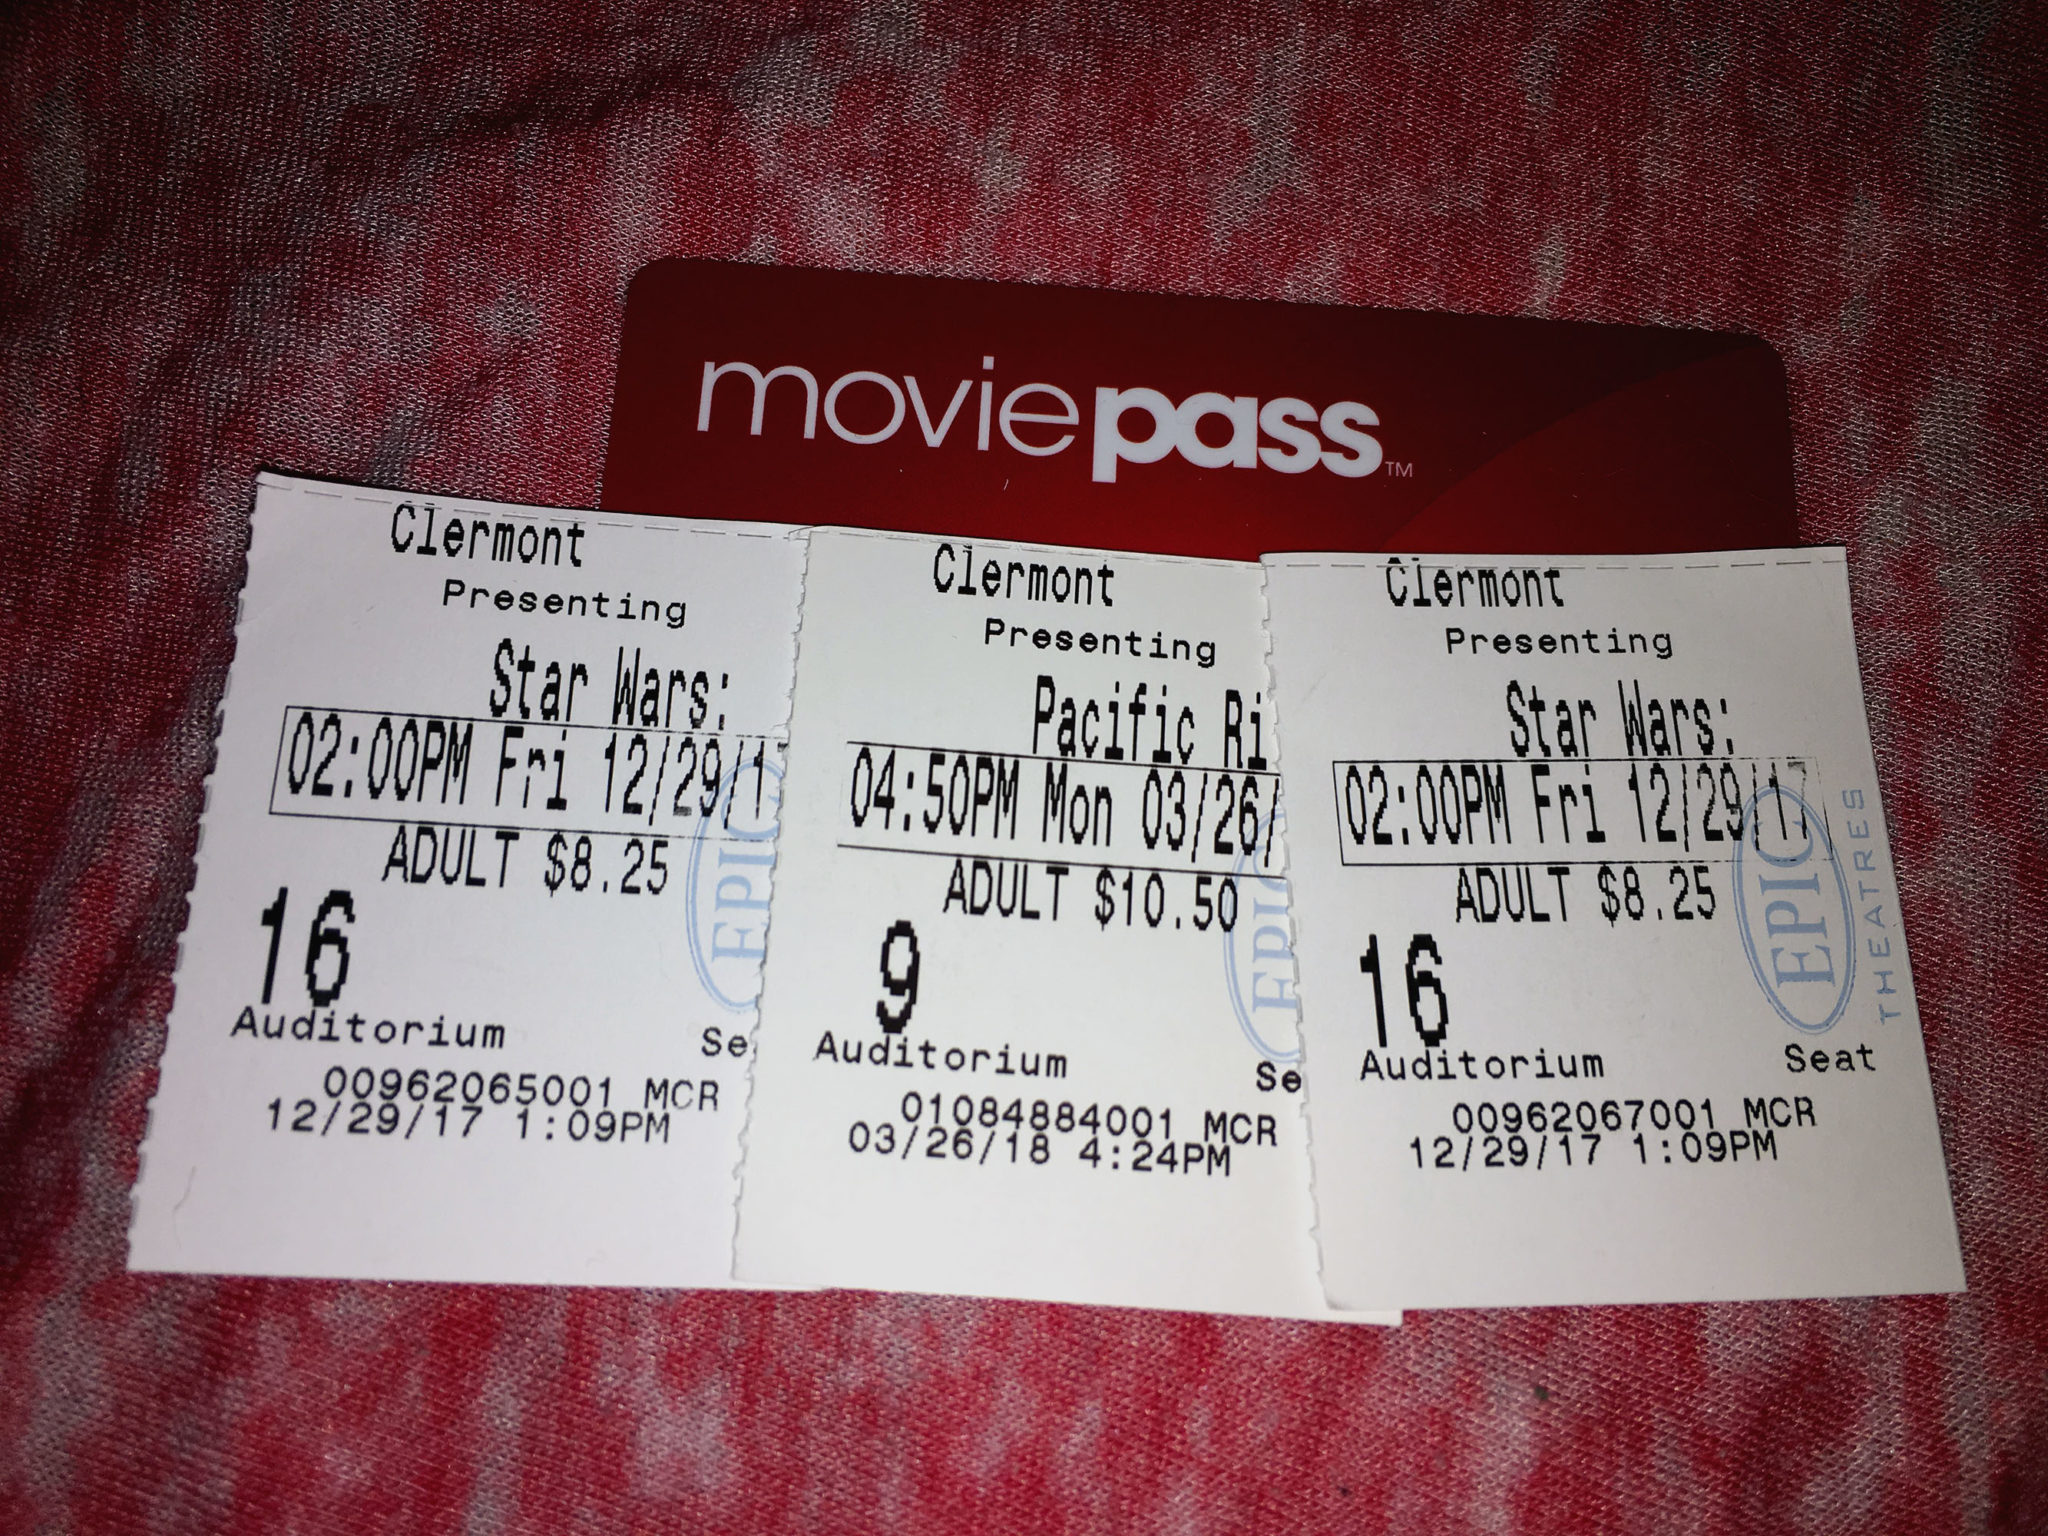 Movie Pass Card and three ticket stubs.